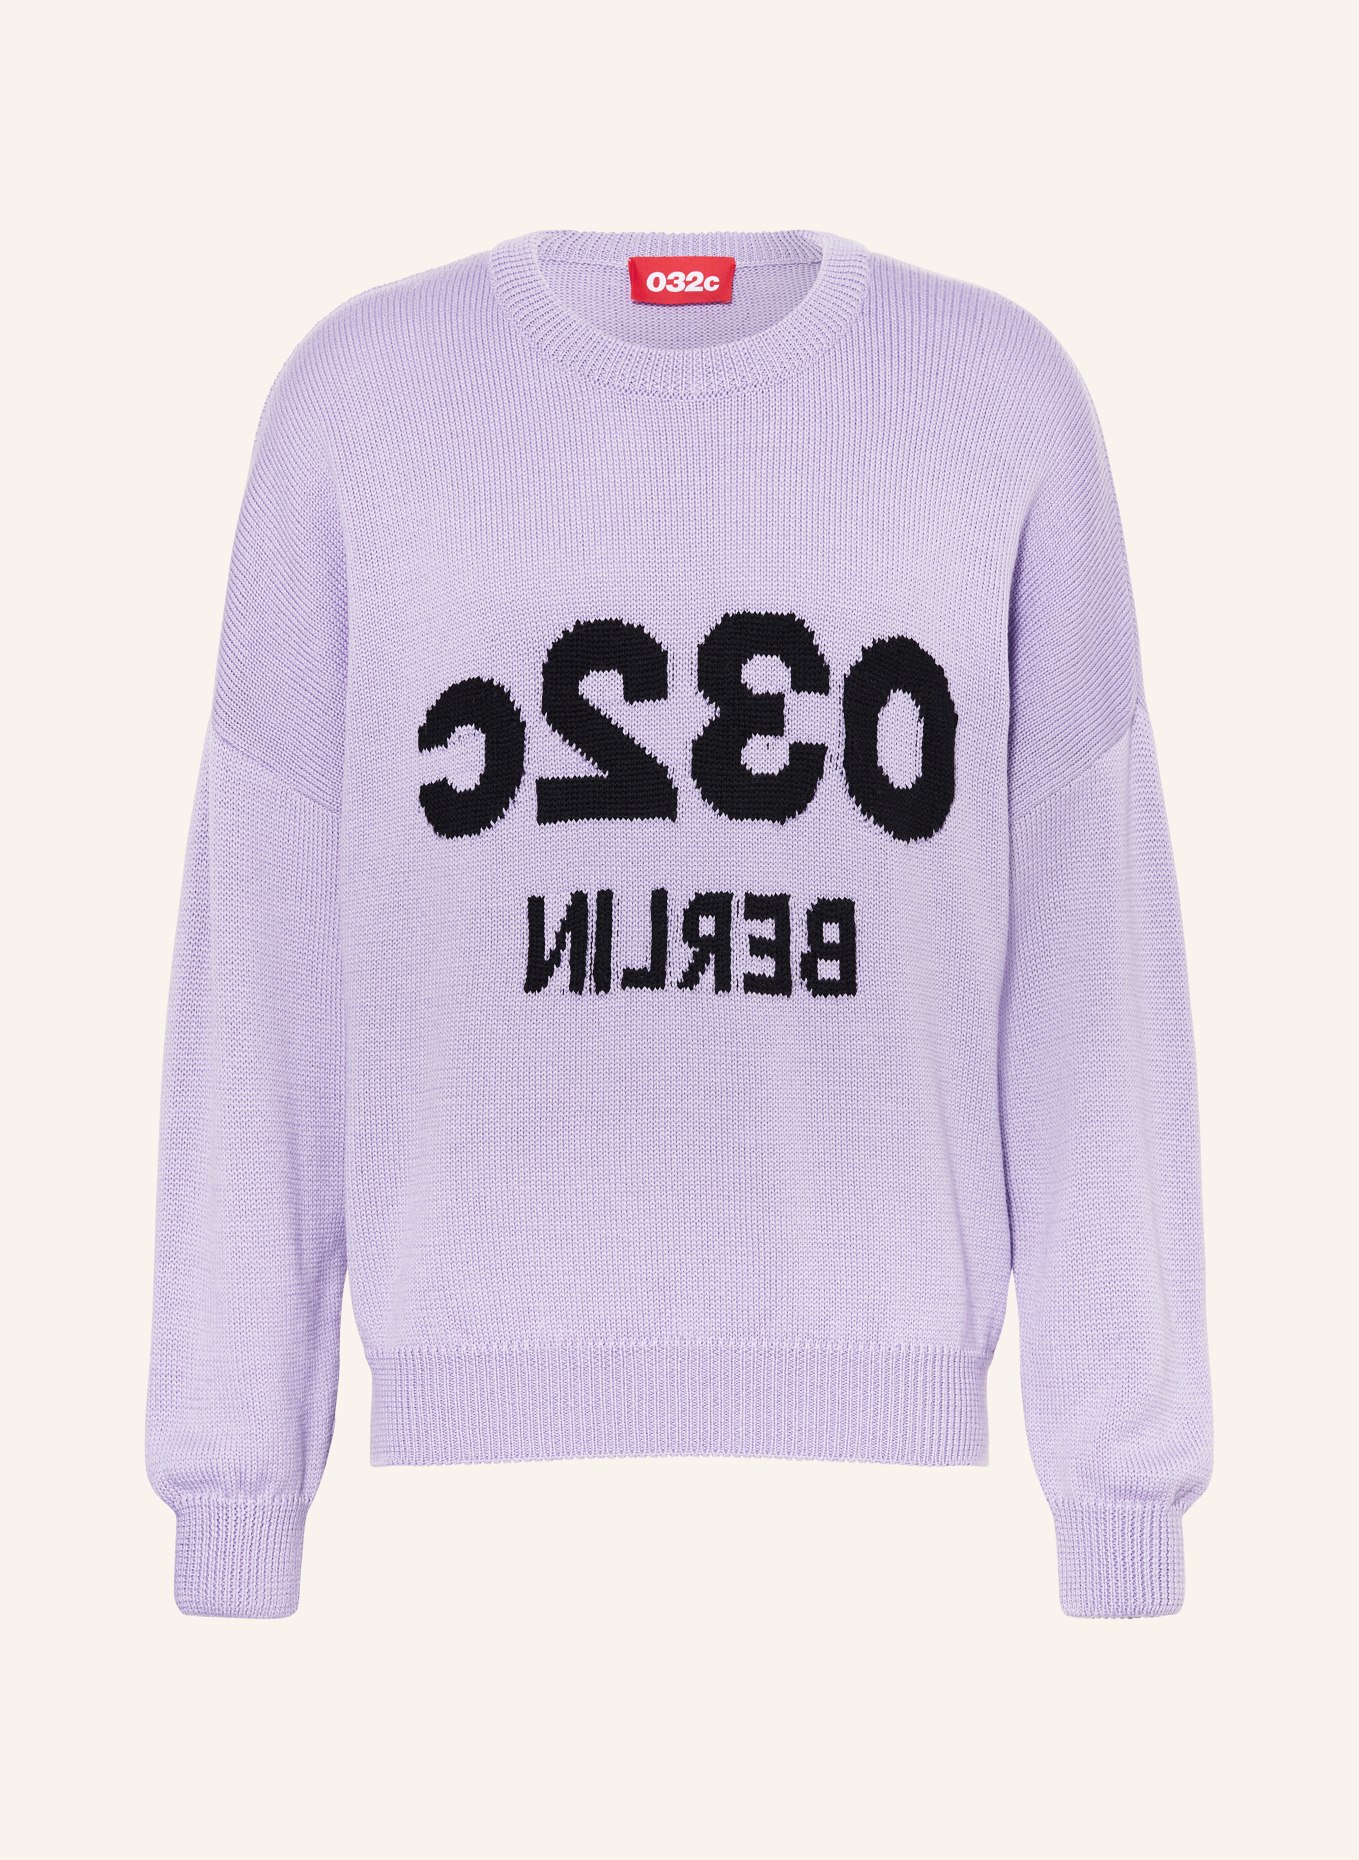 032c Sweater made of merino wool, Color: LIGHT PURPLE (Image 1)